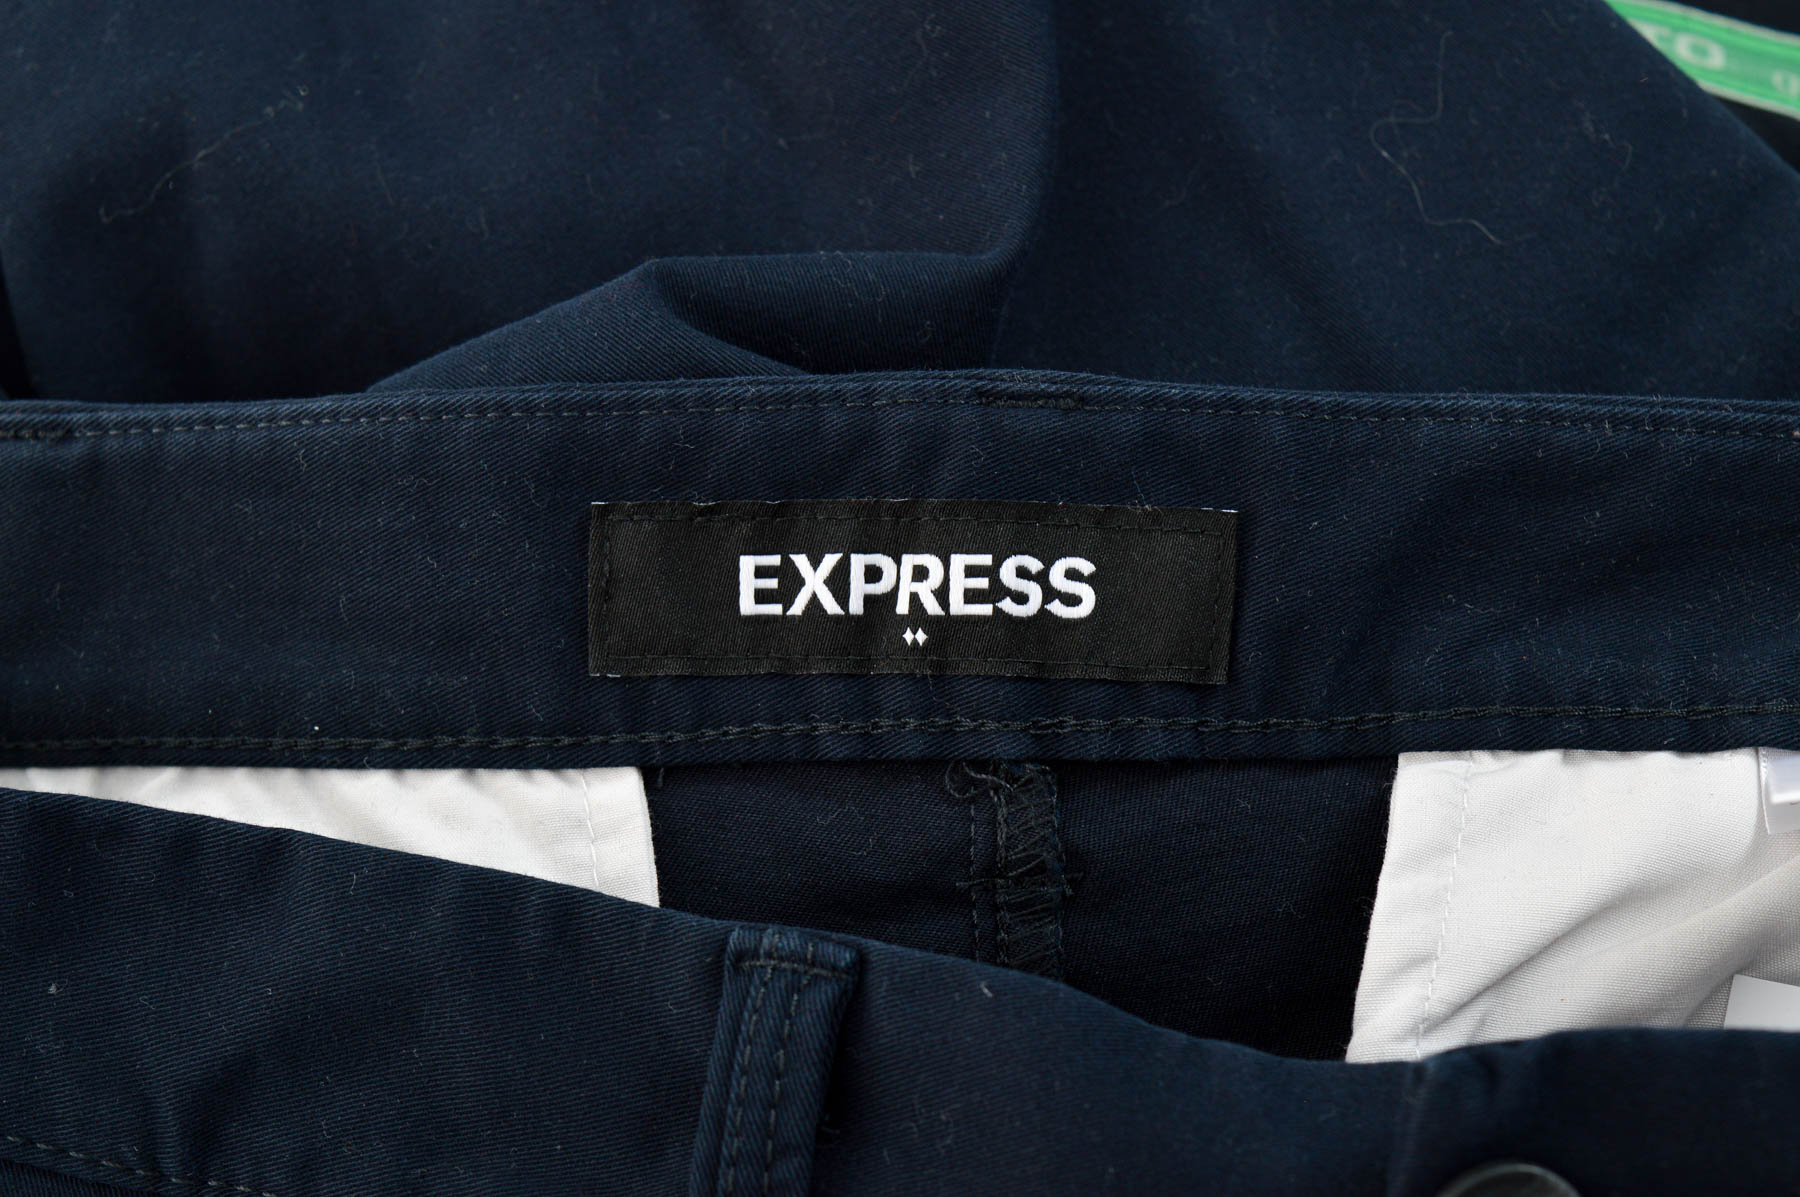 Men's trousers - Express - 2